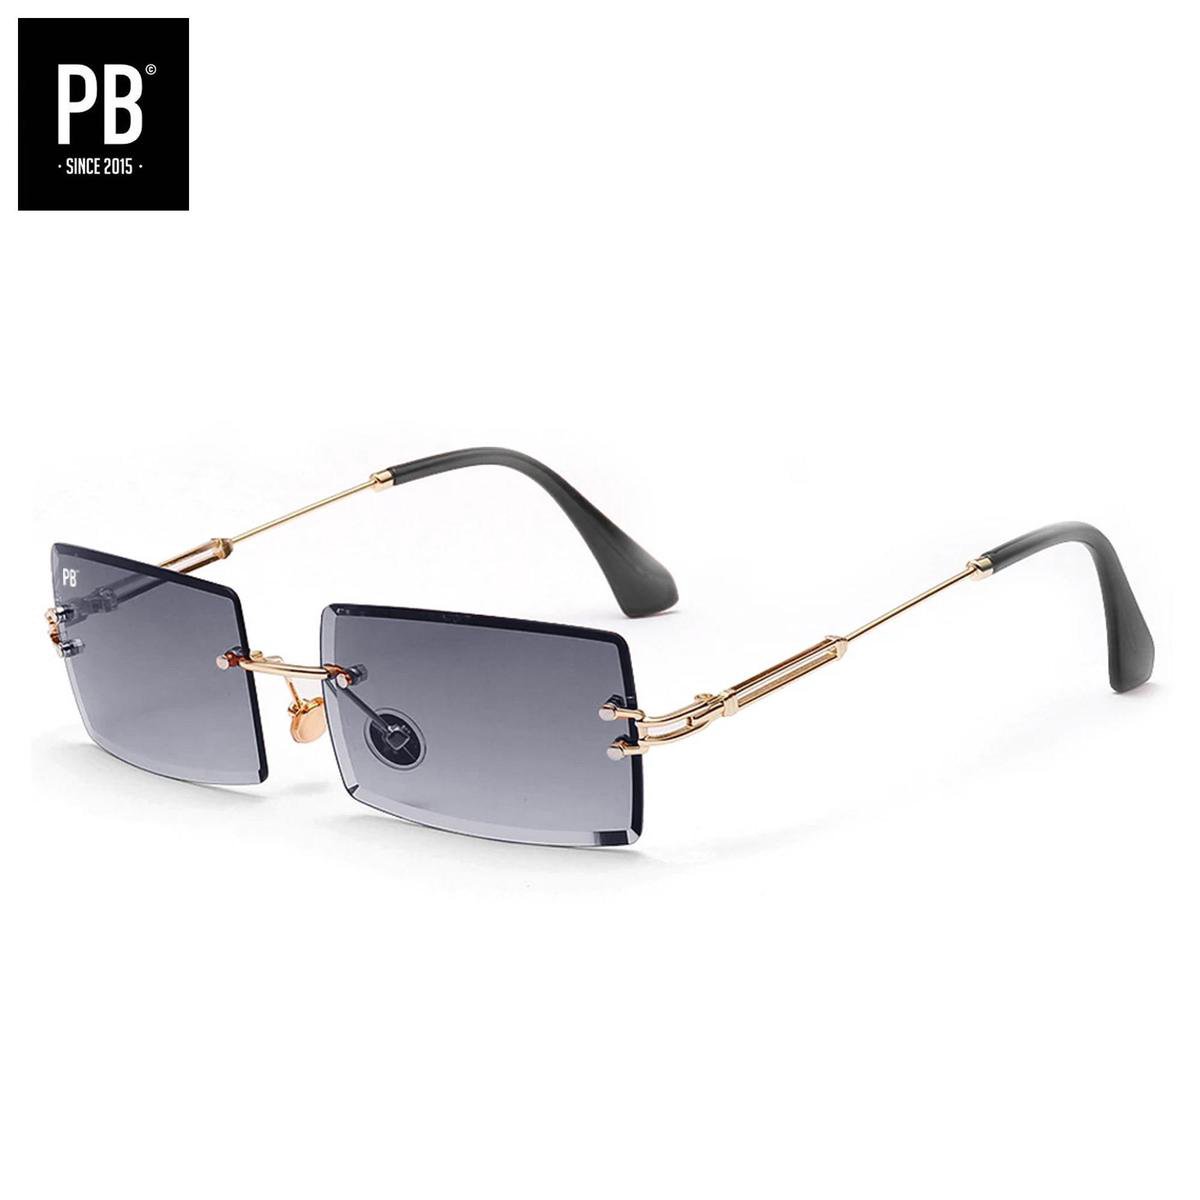 PB Sunglasses - Gipsy Gradient Grey. - Zonnebril heren en dames - Gepolariseerd - Randloze zonnebril - Festival bril